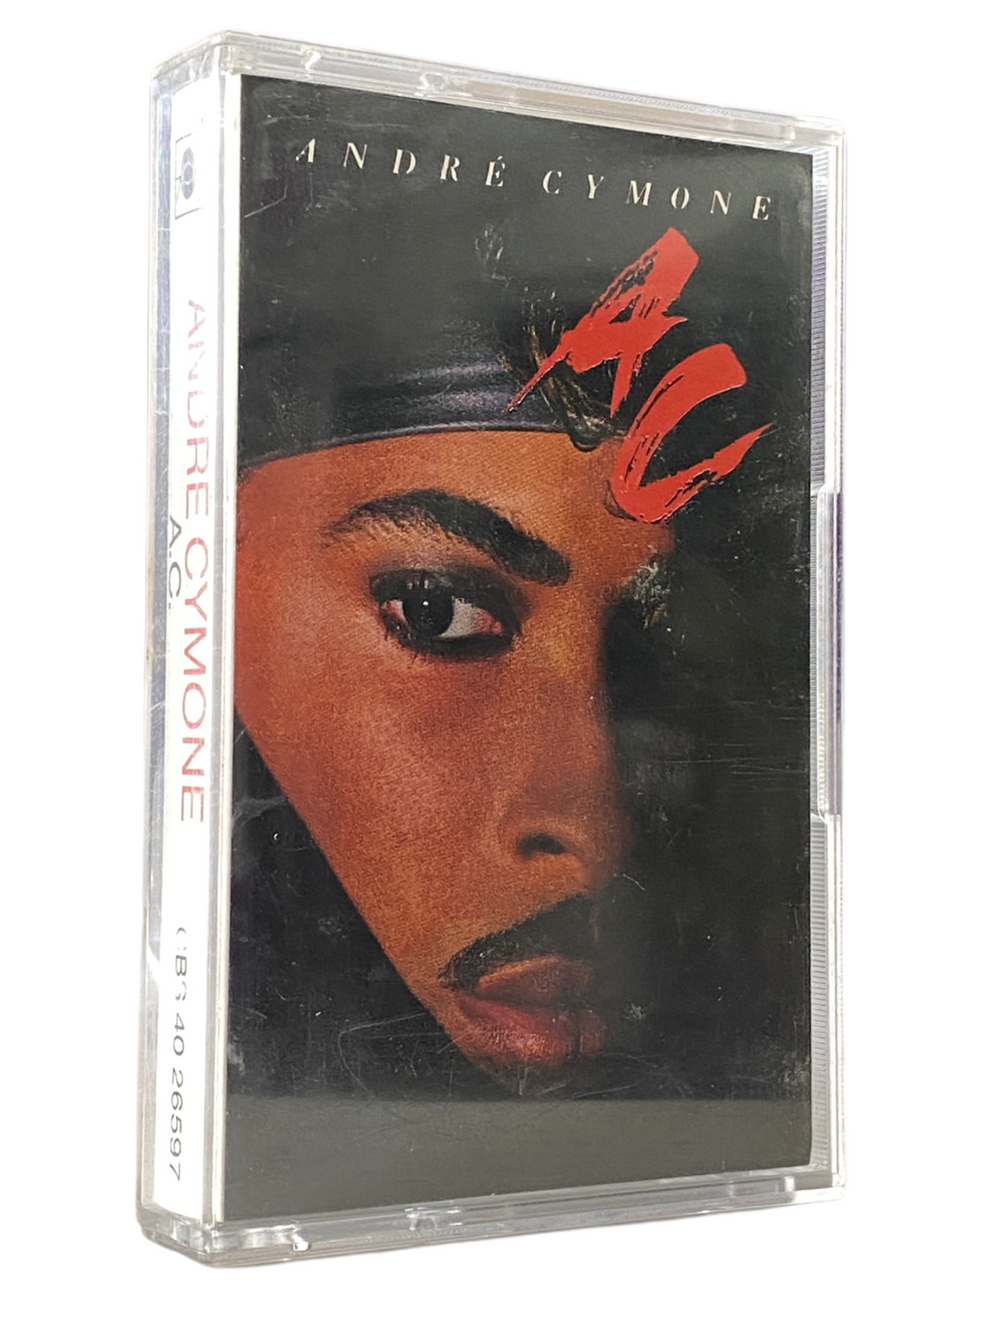 Prince – Andre Cymone AC Original Cassette Tape 1985 UK Release Prince Dance Electric